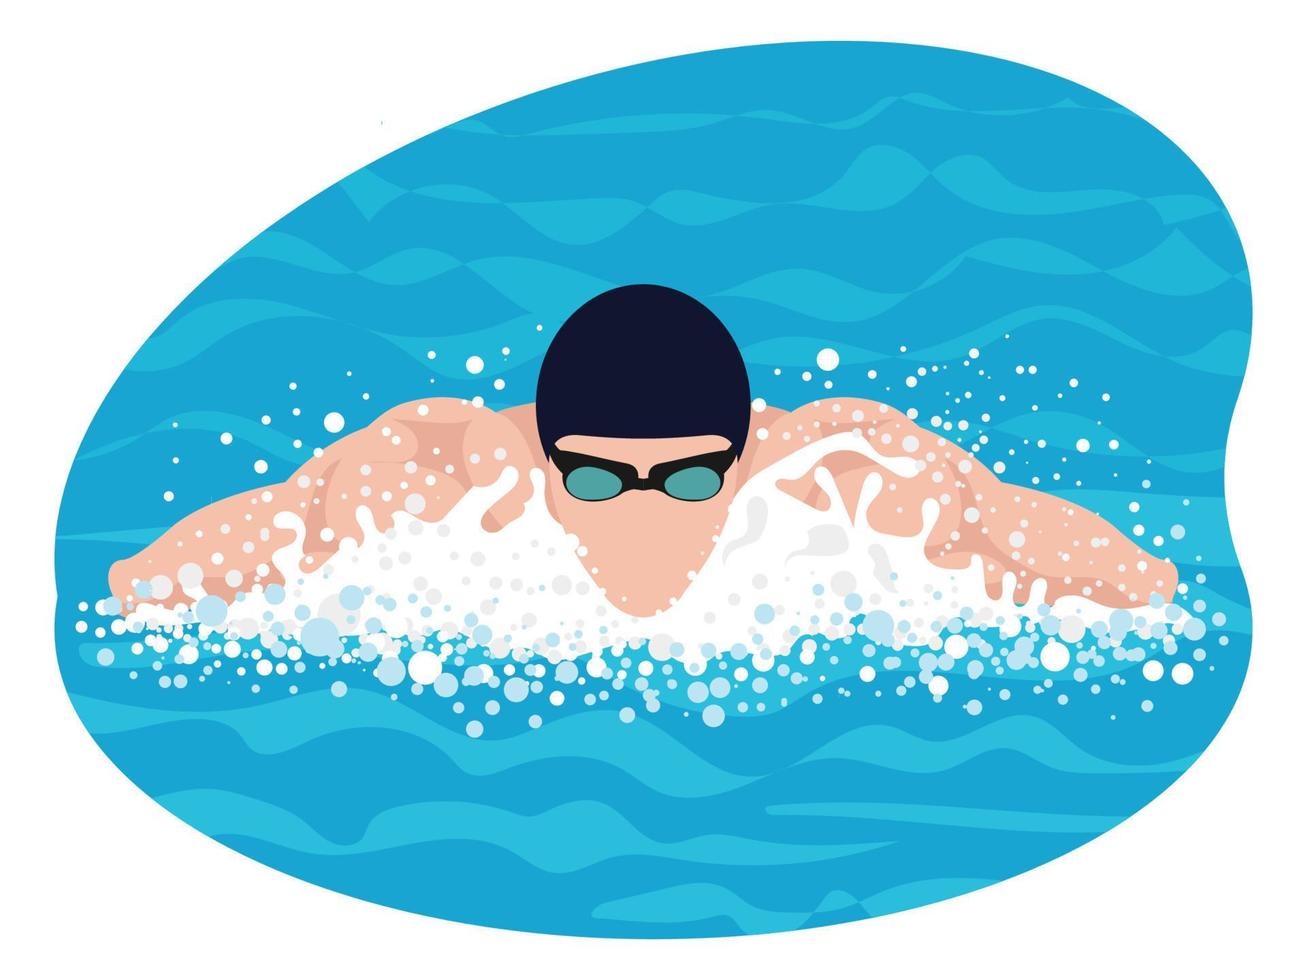 mannetje zwemmer spel illustratie. vector